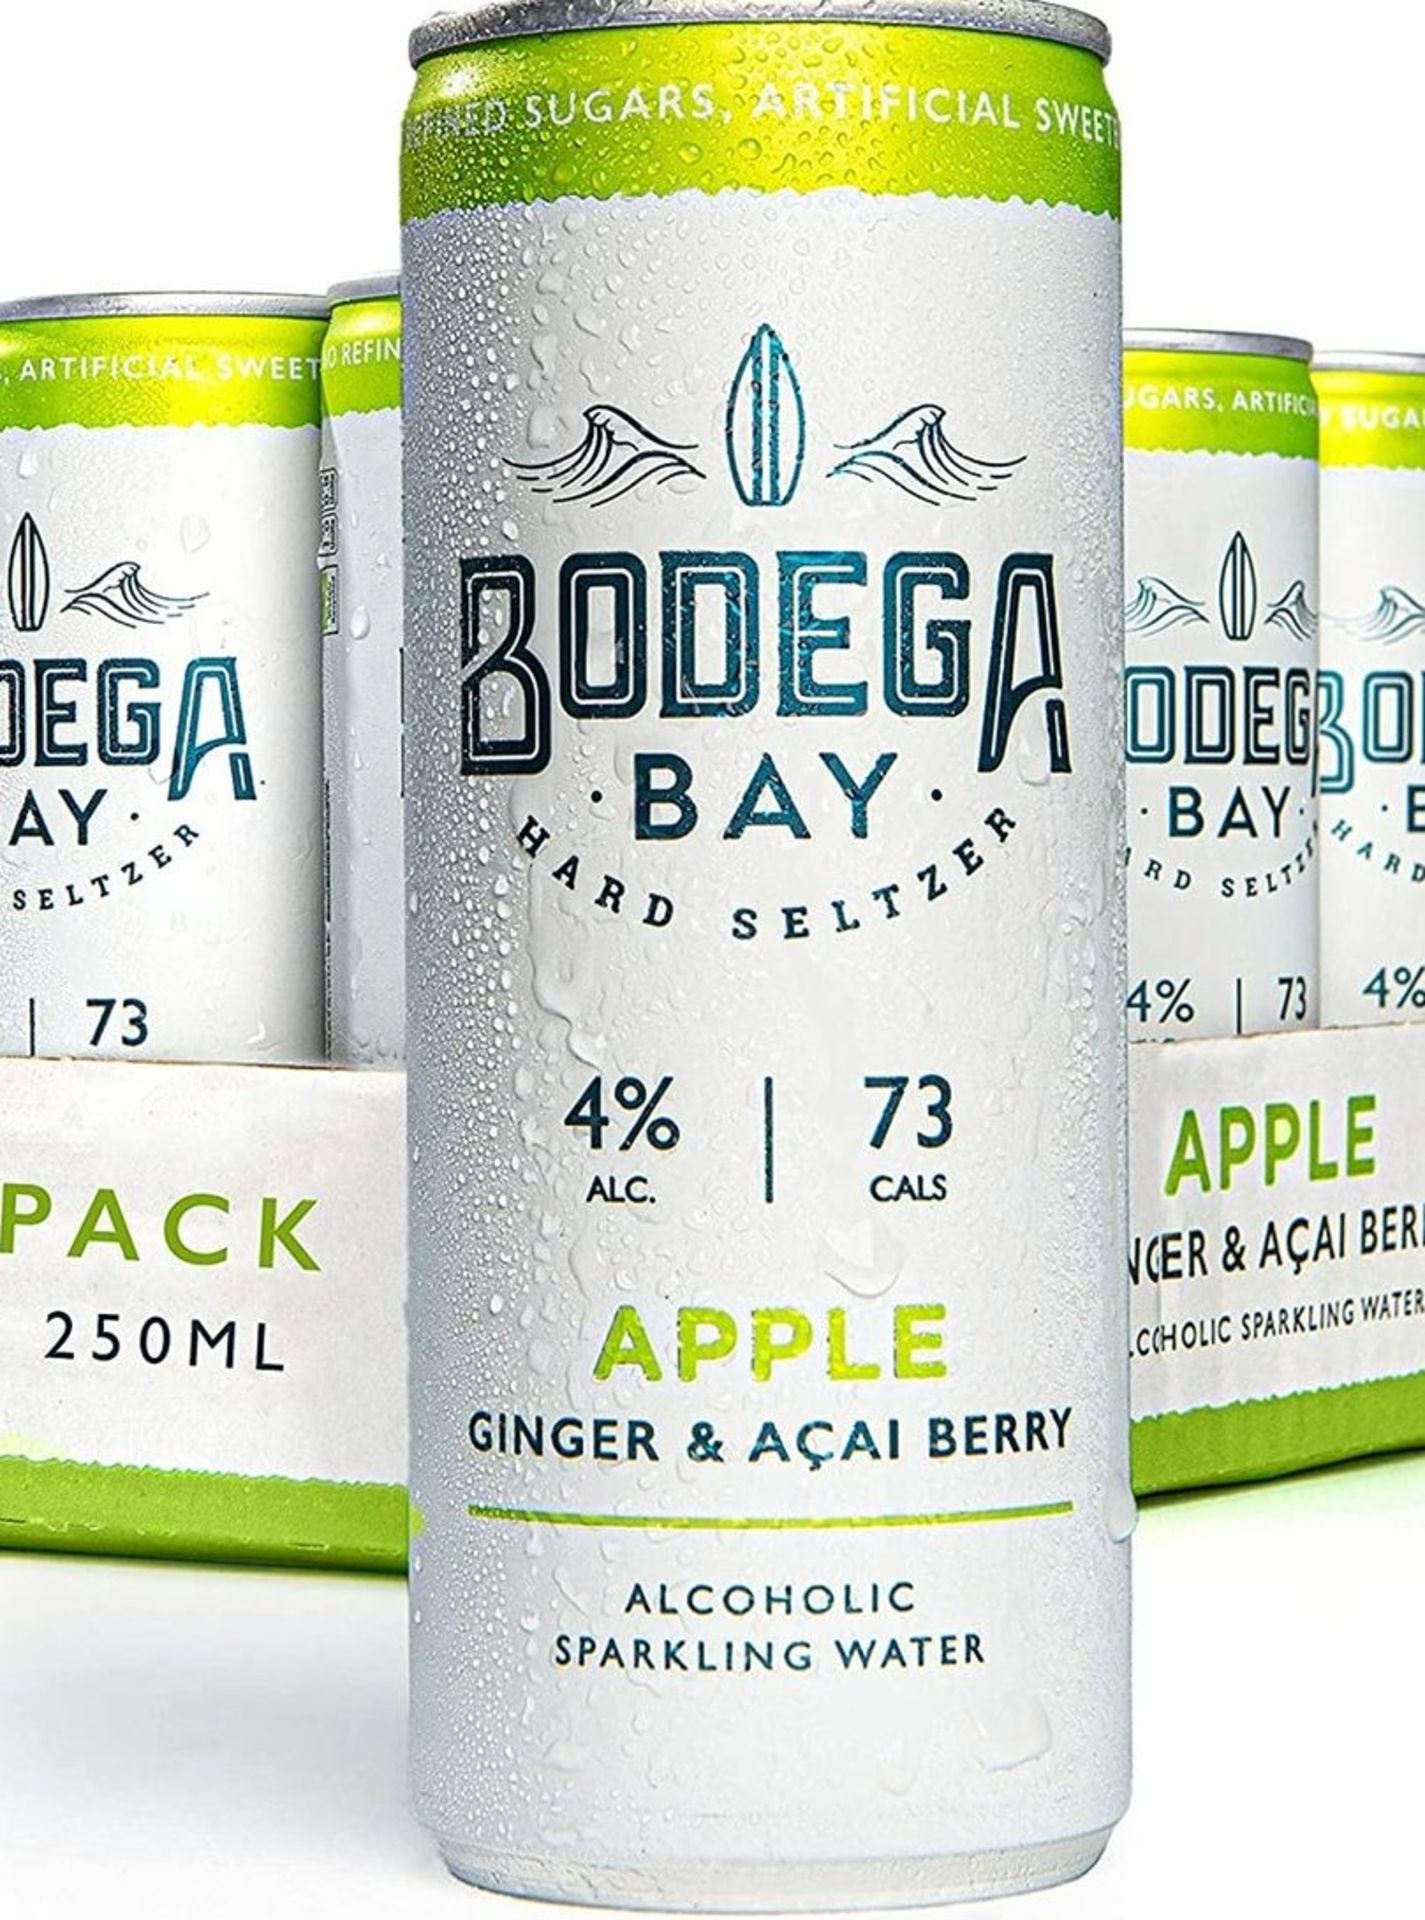 24 x Bodega Bay Hard Seltzer 250ml Alcoholic Sparkling Water Drinks - Apple Ginger & Acai Berry - 4% - Image 9 of 10